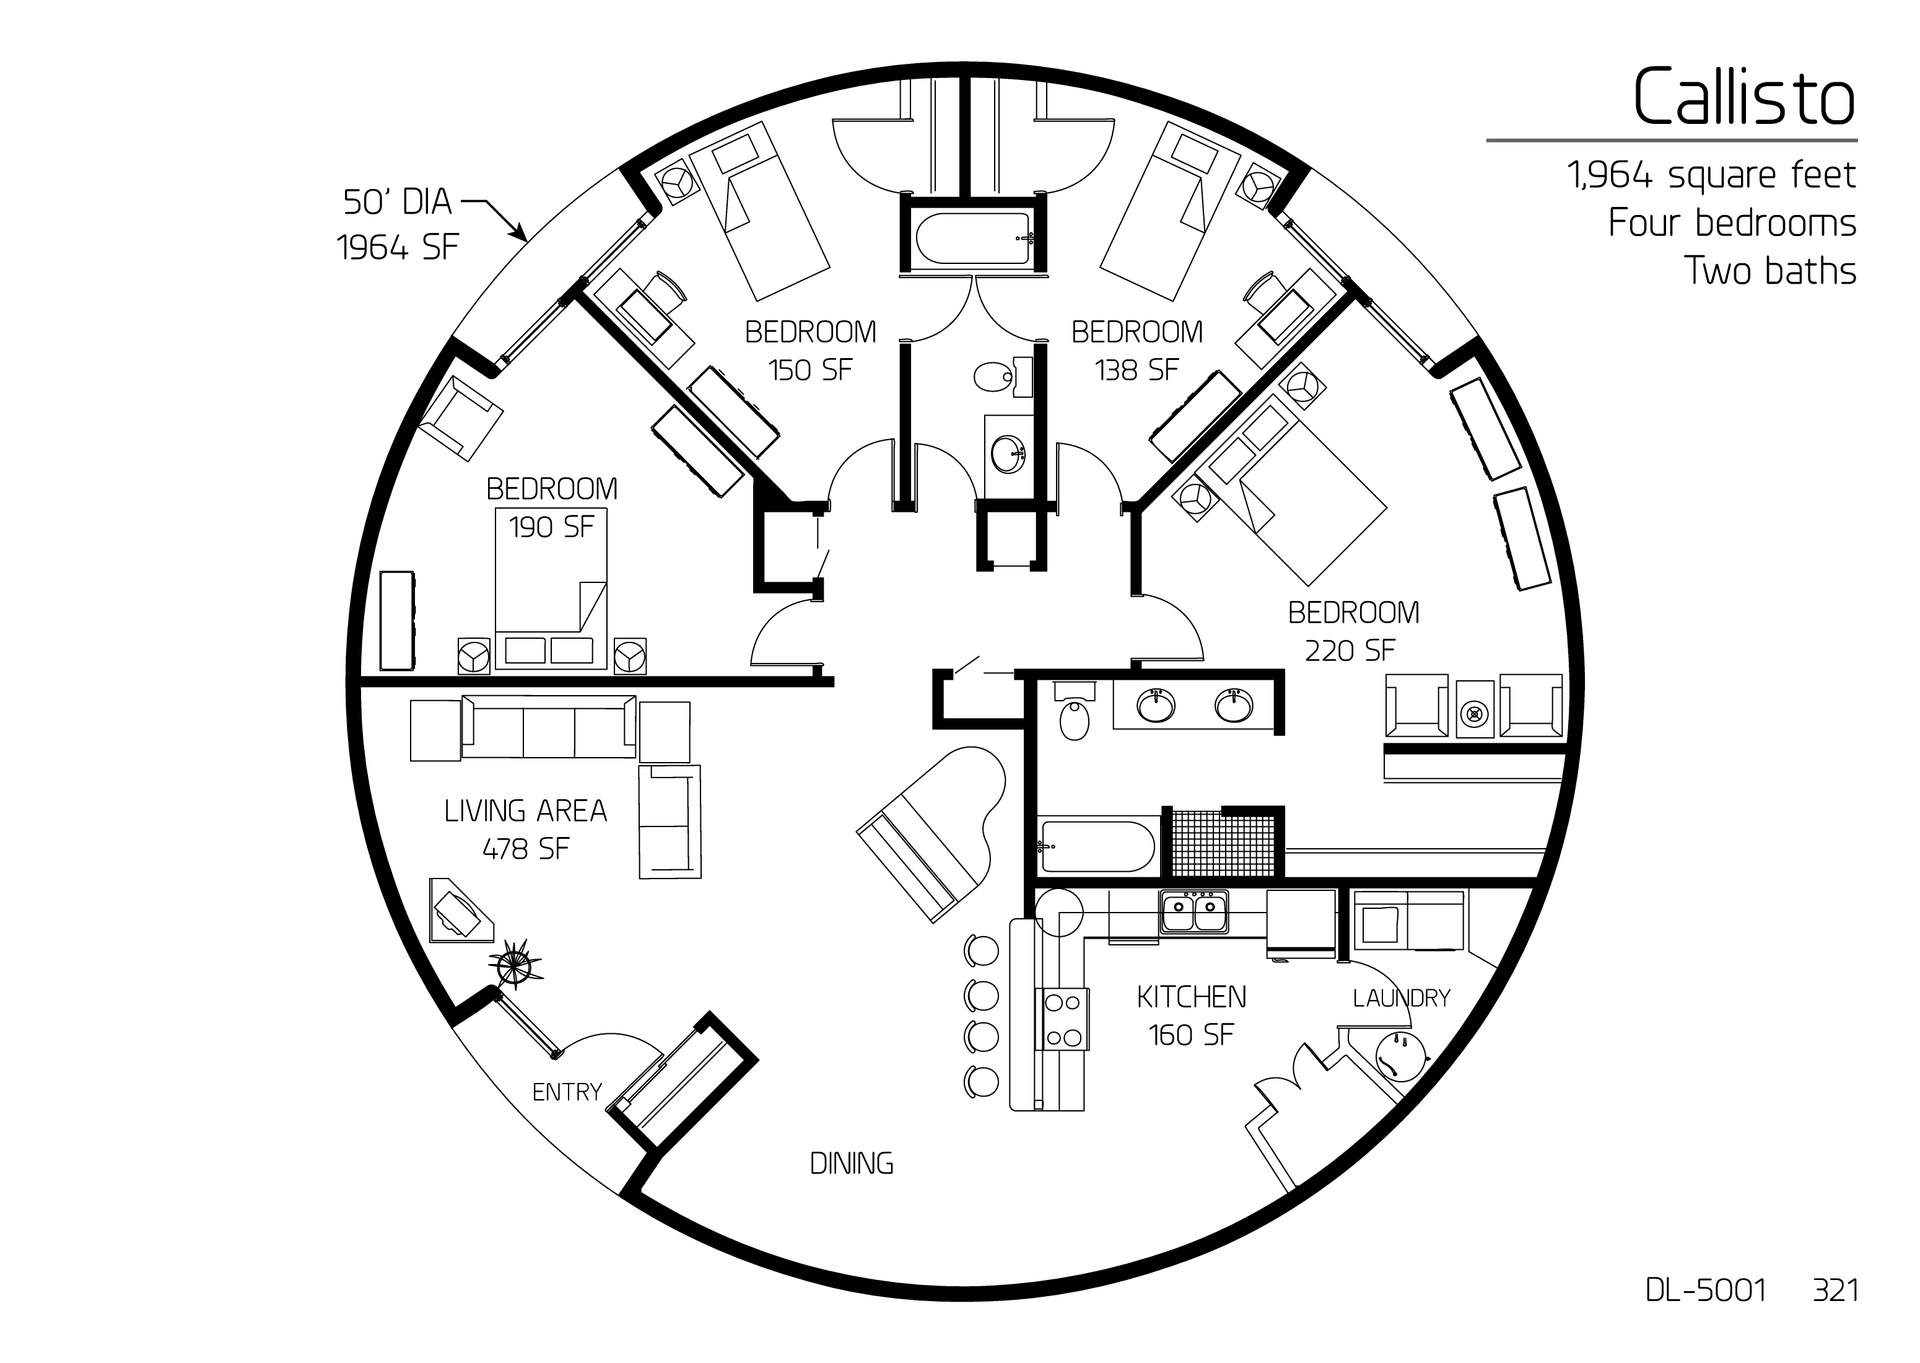 Callisto: A 50' Diameter, 1,964 SF, Four-Bedroom, Two-Bath Floor Plan.